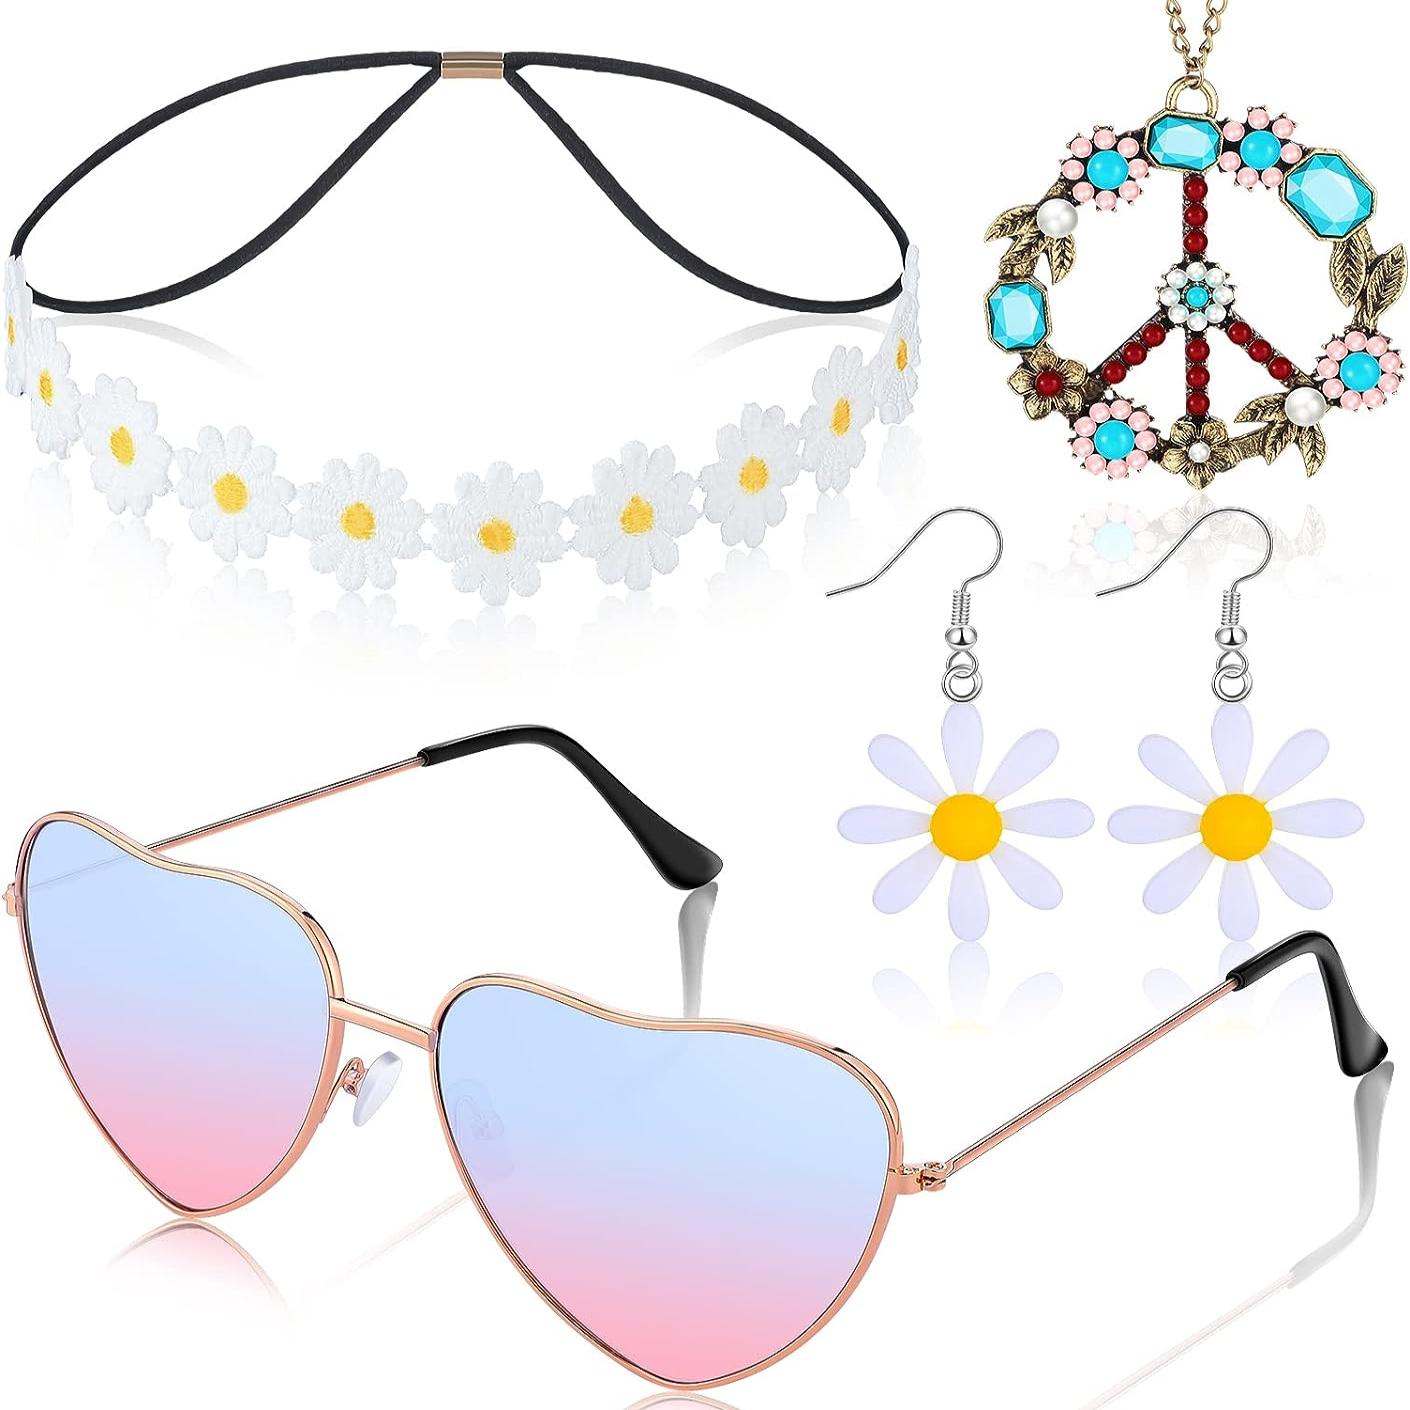 1set, 5 Pcs Hippie Accessories Peace Sign  Necklace,earring,sunglasses,sunflower Headband,rainbow Tie Dye Hairband For  Fancy Women Men,60s 70s Style Dr